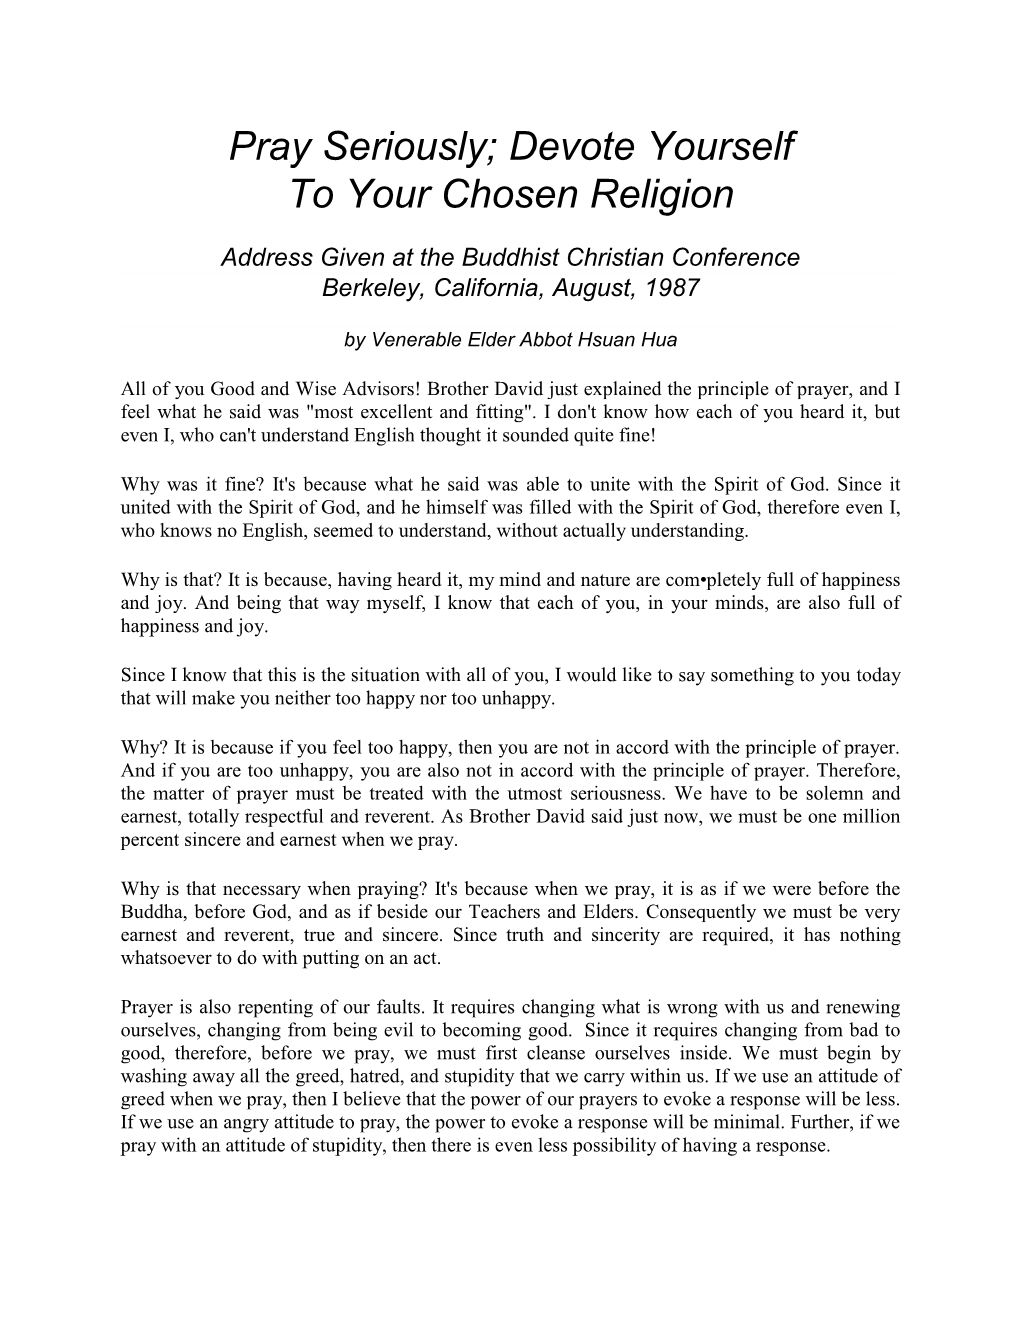 Pray Seriously; Devote Yourself to Your Chosen Religion